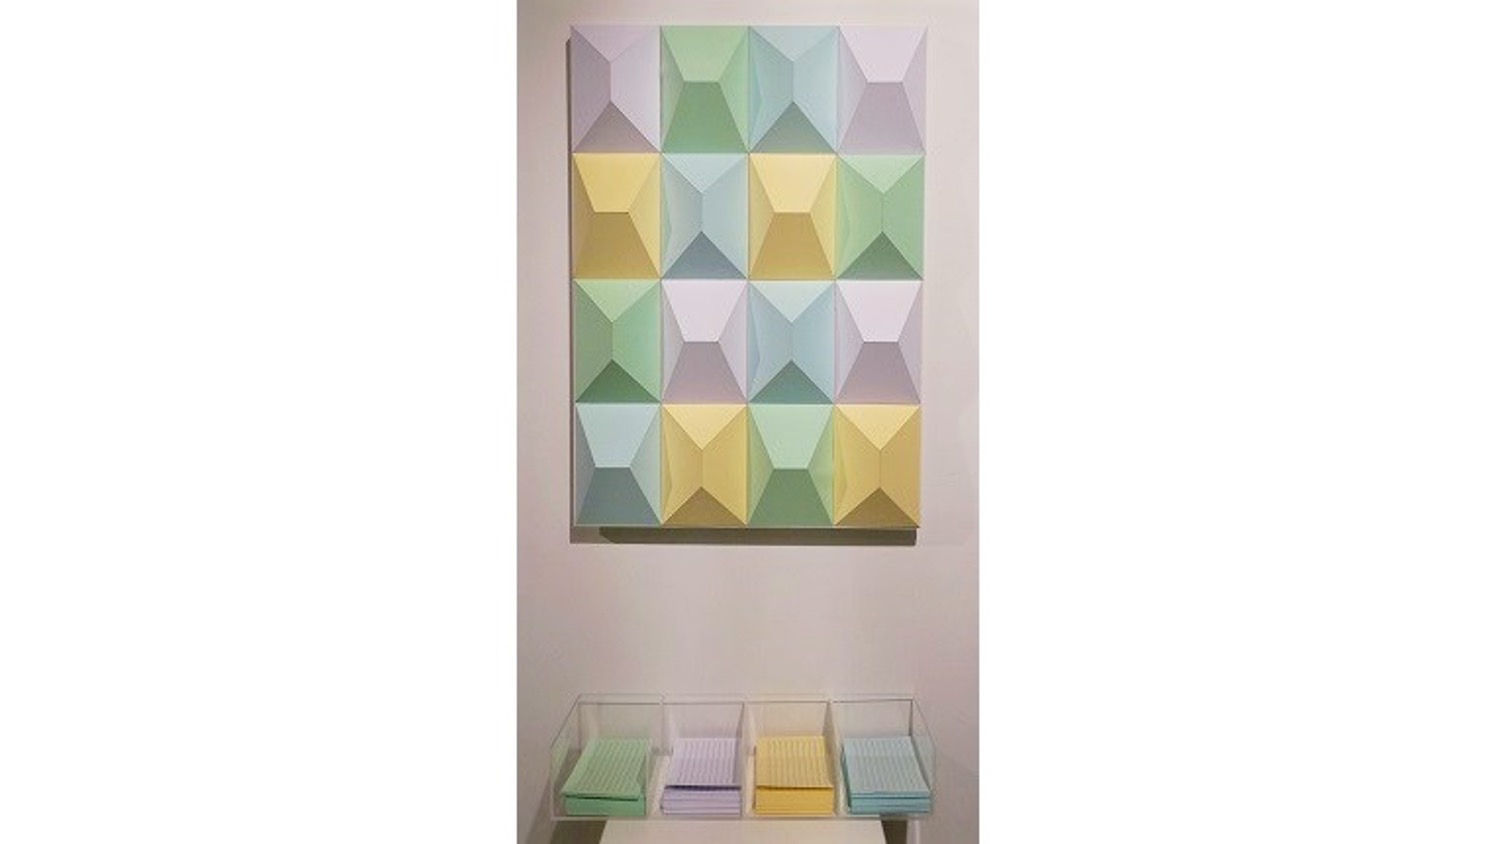 Gabriel Acevedo Velarde. "Art Piece Nº 7", 2011. Obra tridimensional realizada en papel. Metacrilato y papel/fichas de colores. 72 x 42 x 16 cm.